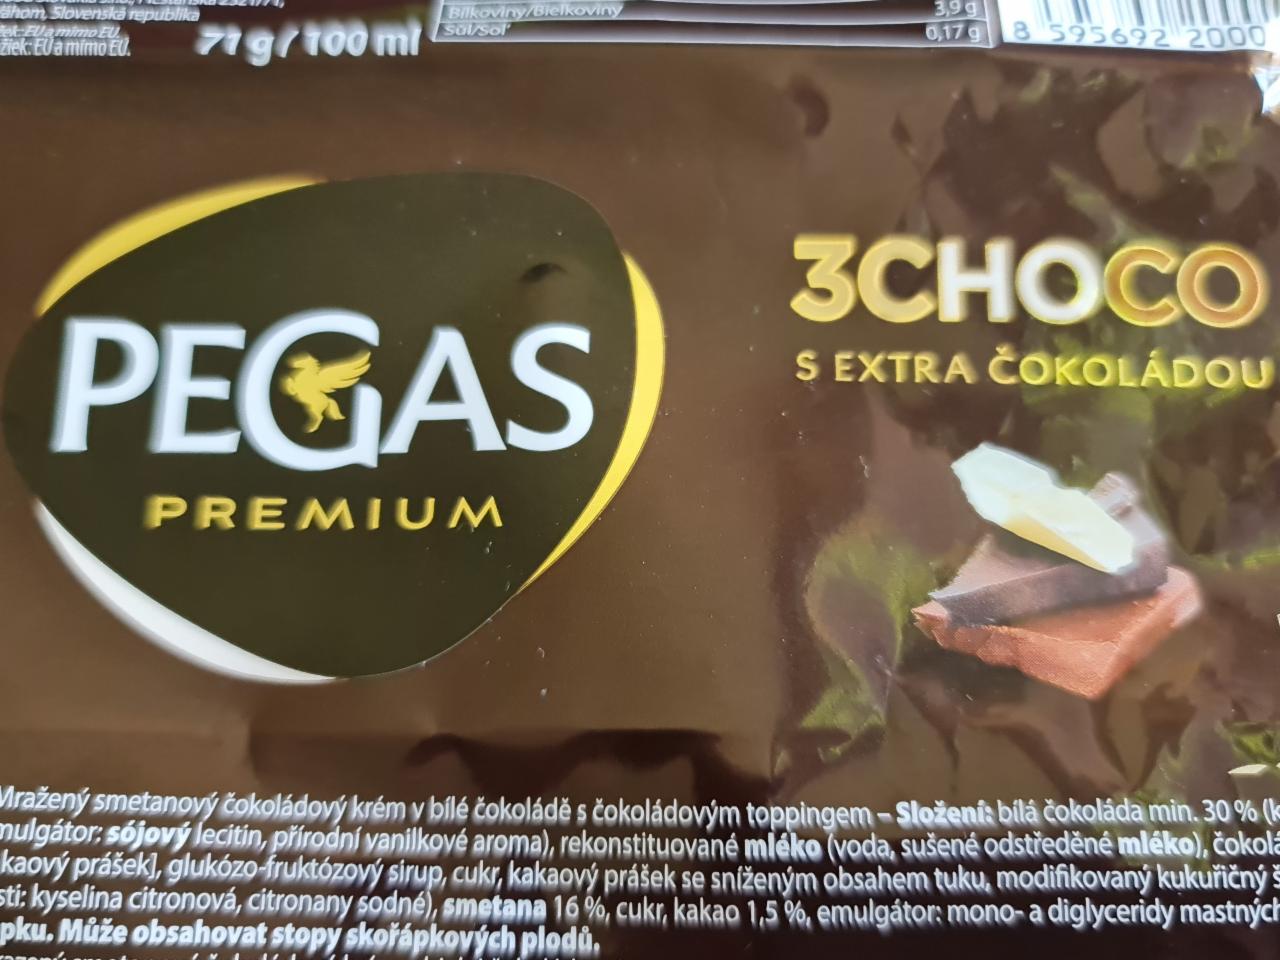 Fotografie - Pegas Premium 3Choco s extra čokoládou